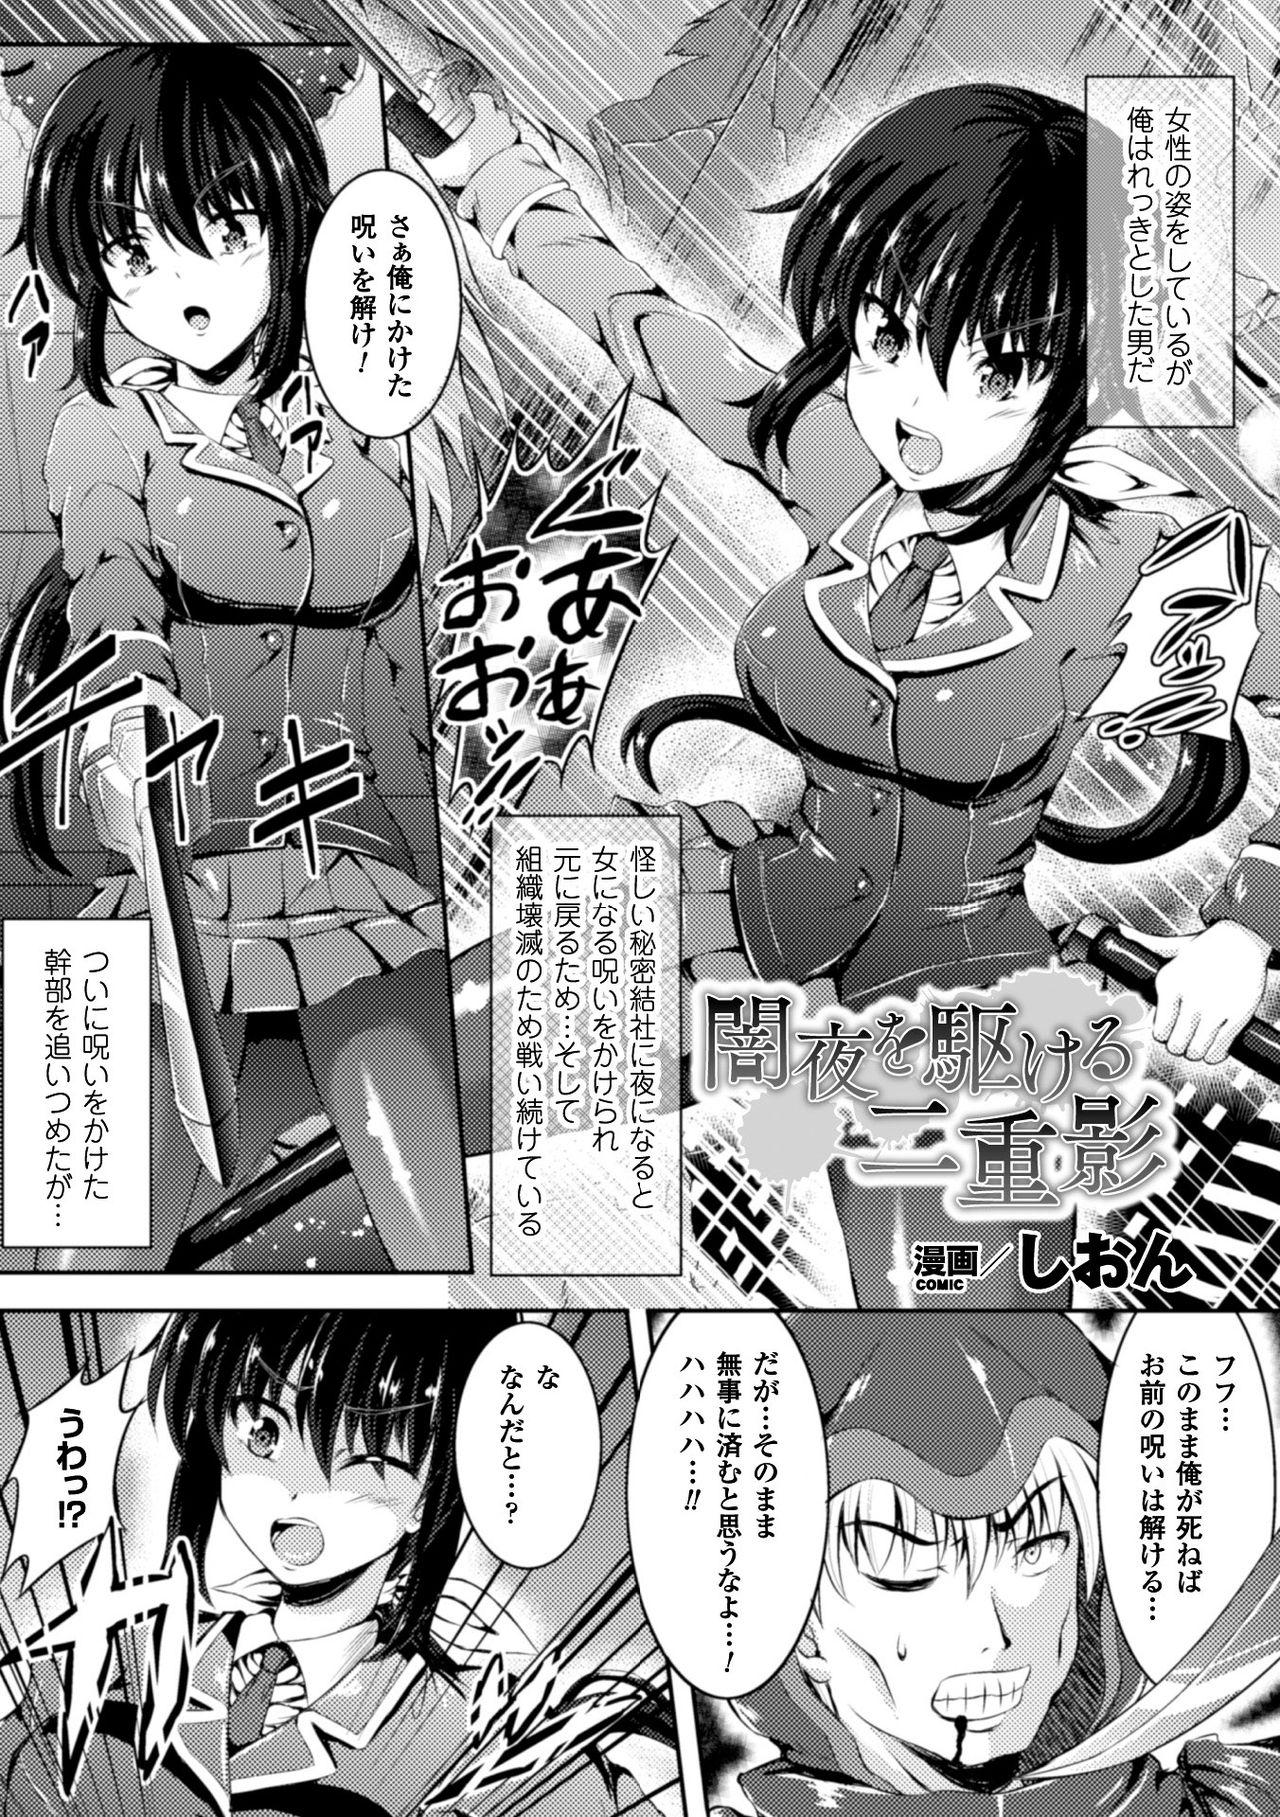 Spy Cam 2D Comic Magazine TS Jibun Heroine mou Hitori no Ore ga Erosugite Gaman Dekinee! Vol. 1 Topless - Page 3